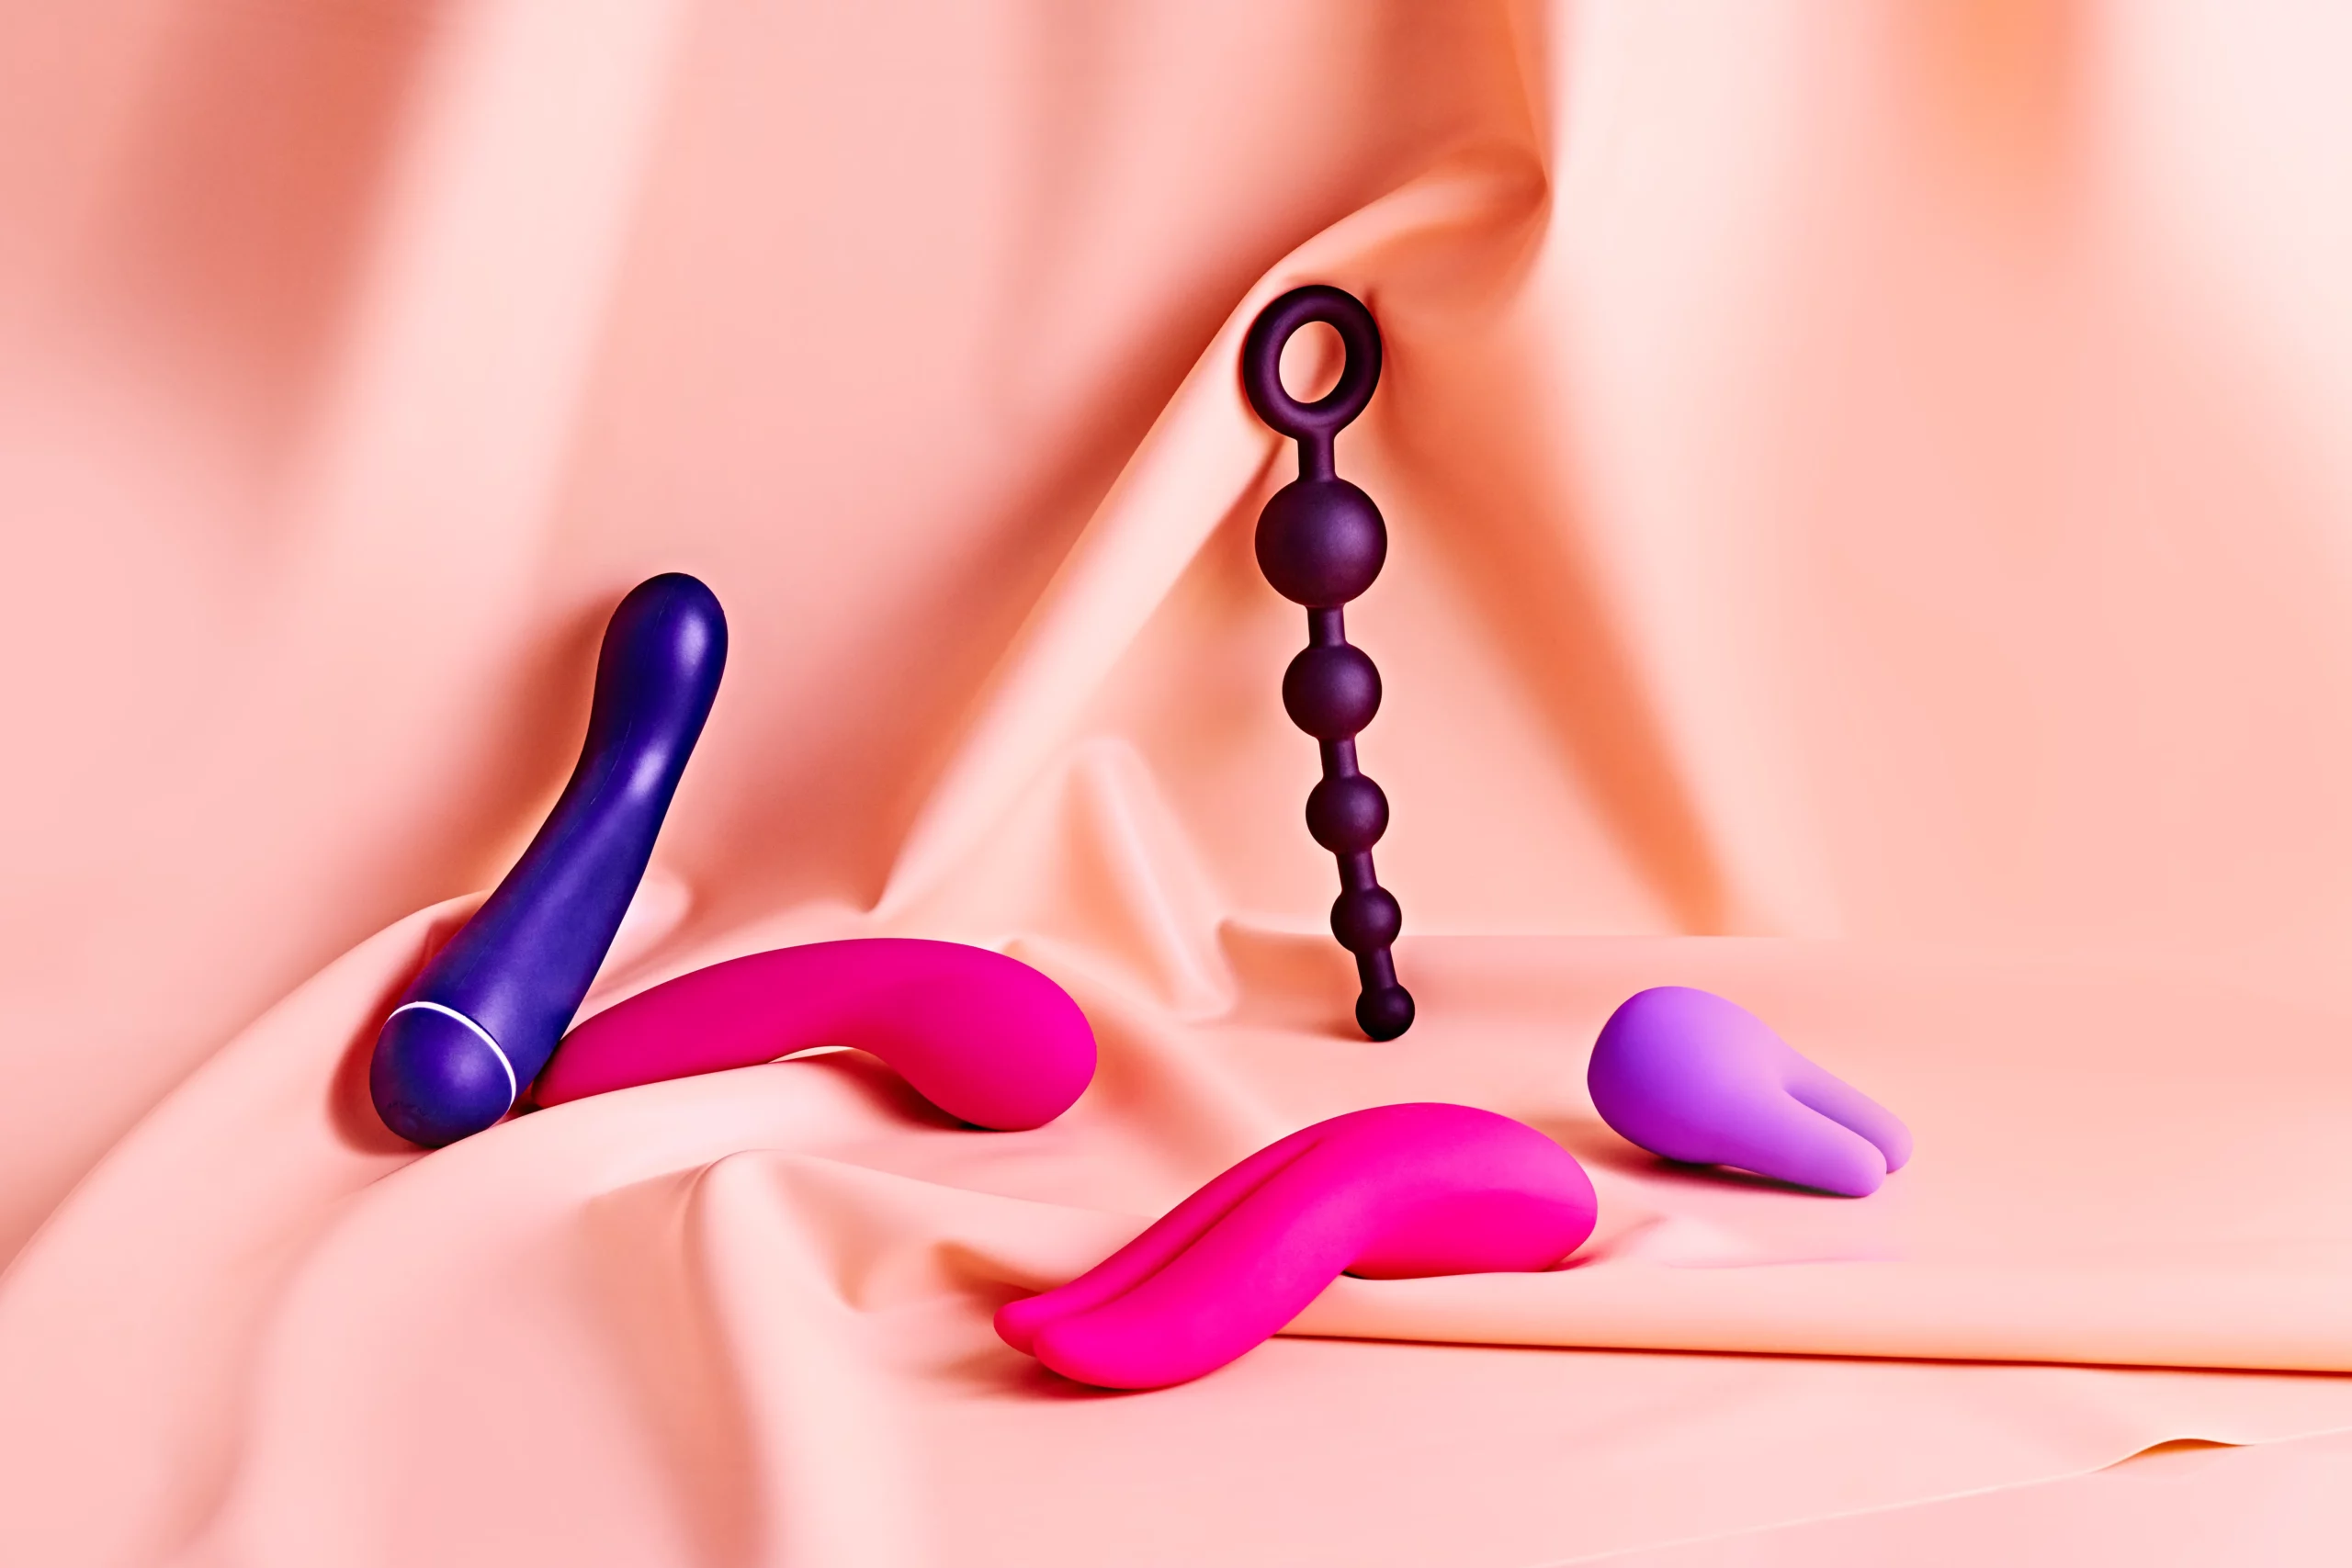 Best Bondage Sex Toys for 2019 - Collars, Rope, Masks, Restraints, Paddles and Whips